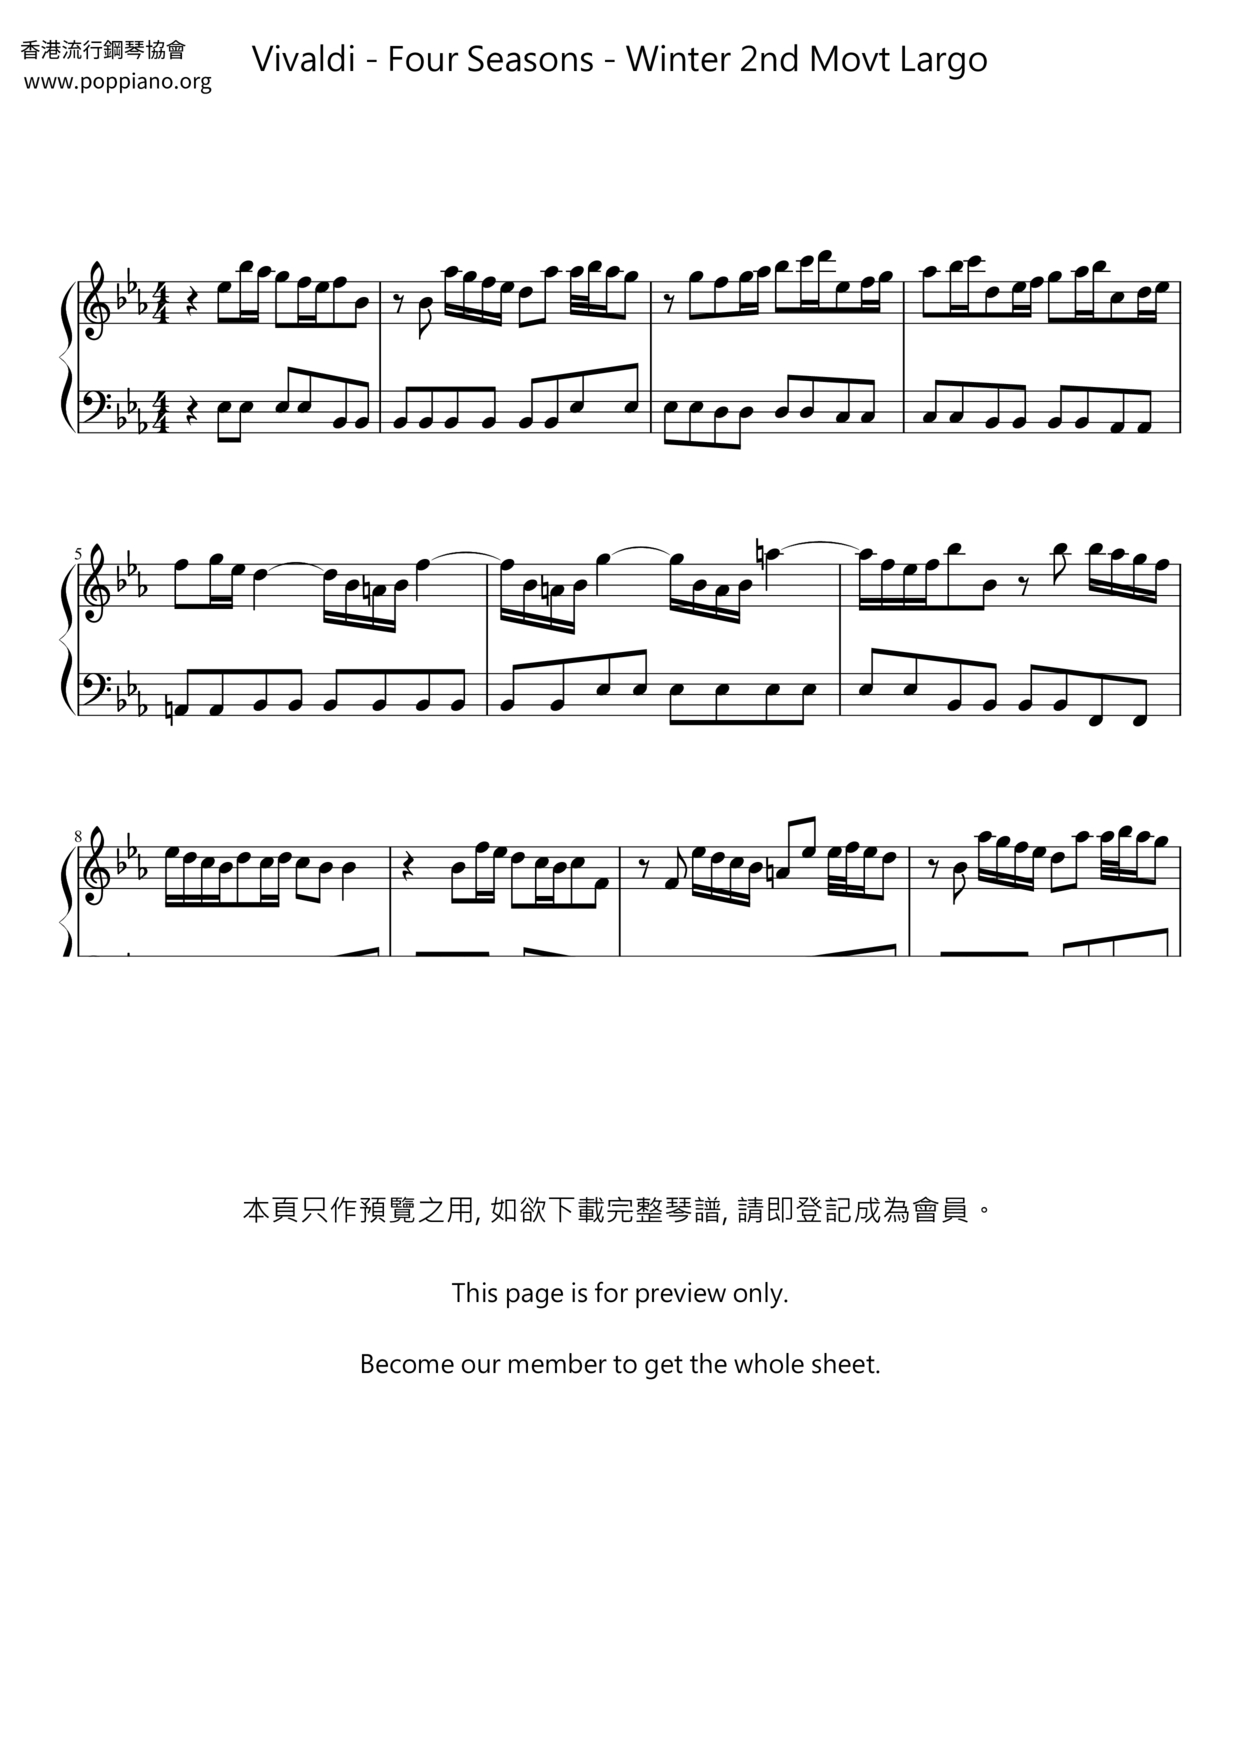 Four Seasons - Winter 2nd Movt Largoピアノ譜